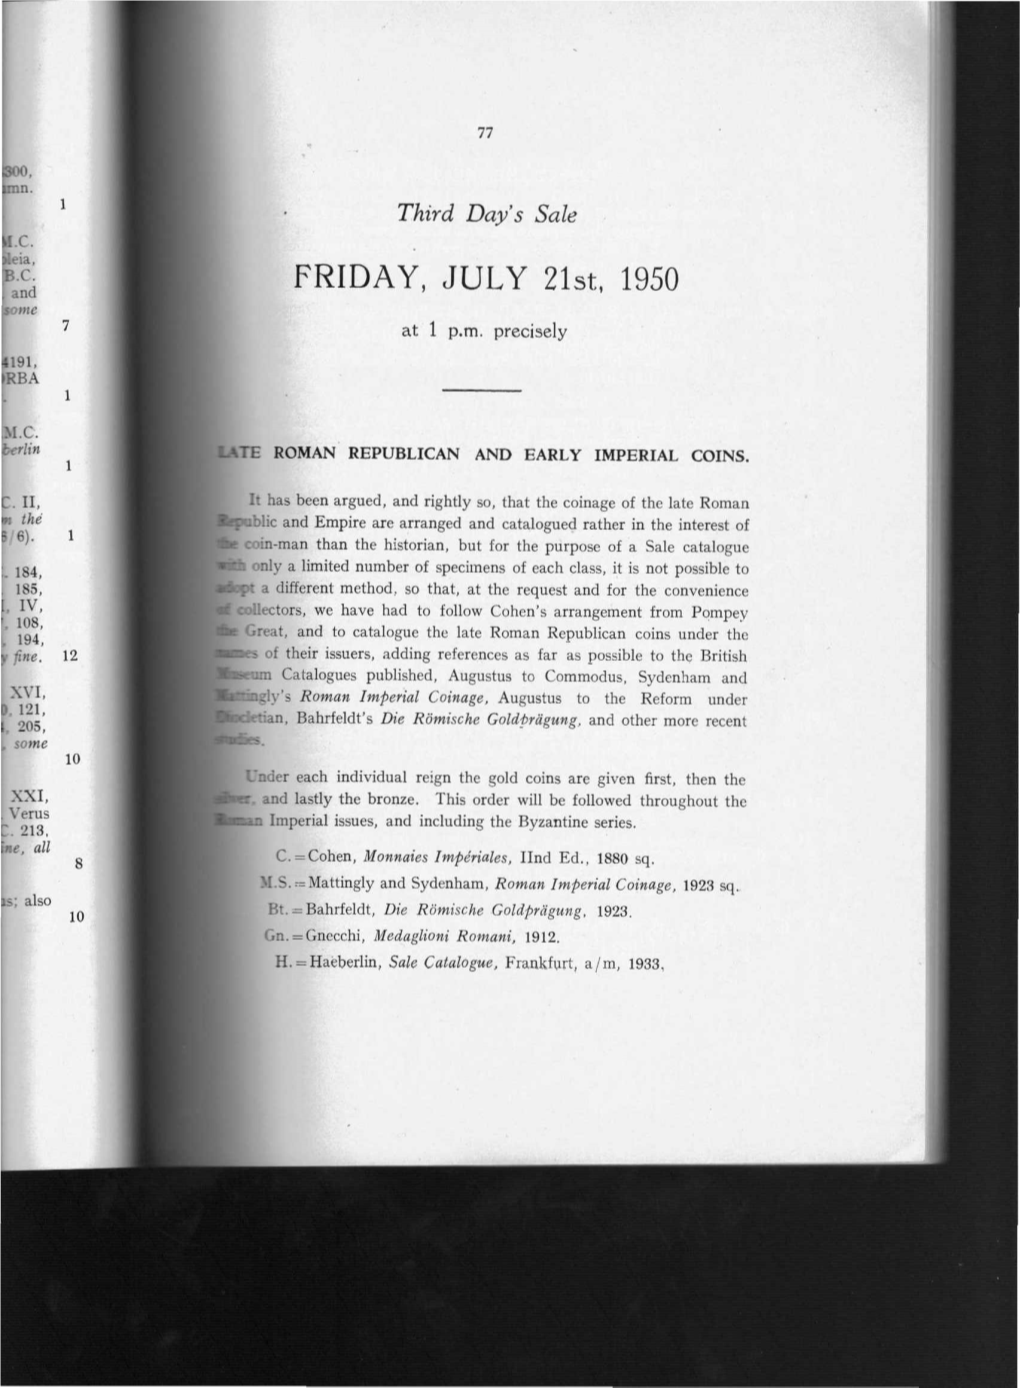 FRIDAY, JULY 21St, 1950